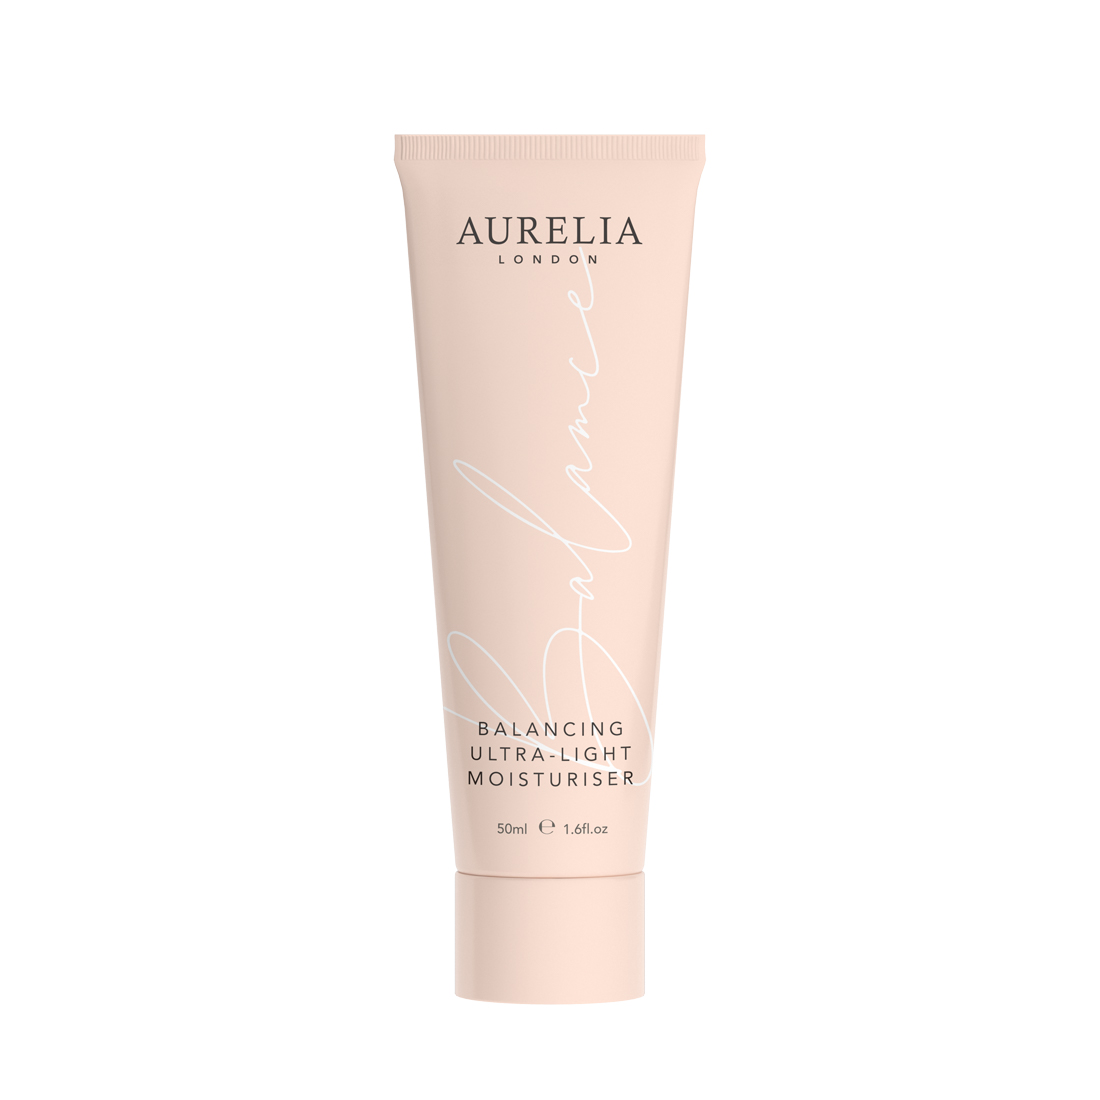 An image of Aurelia London, Balancing Ultra-Light Moisturiser, 50ml, Probiotic moisturiser f...